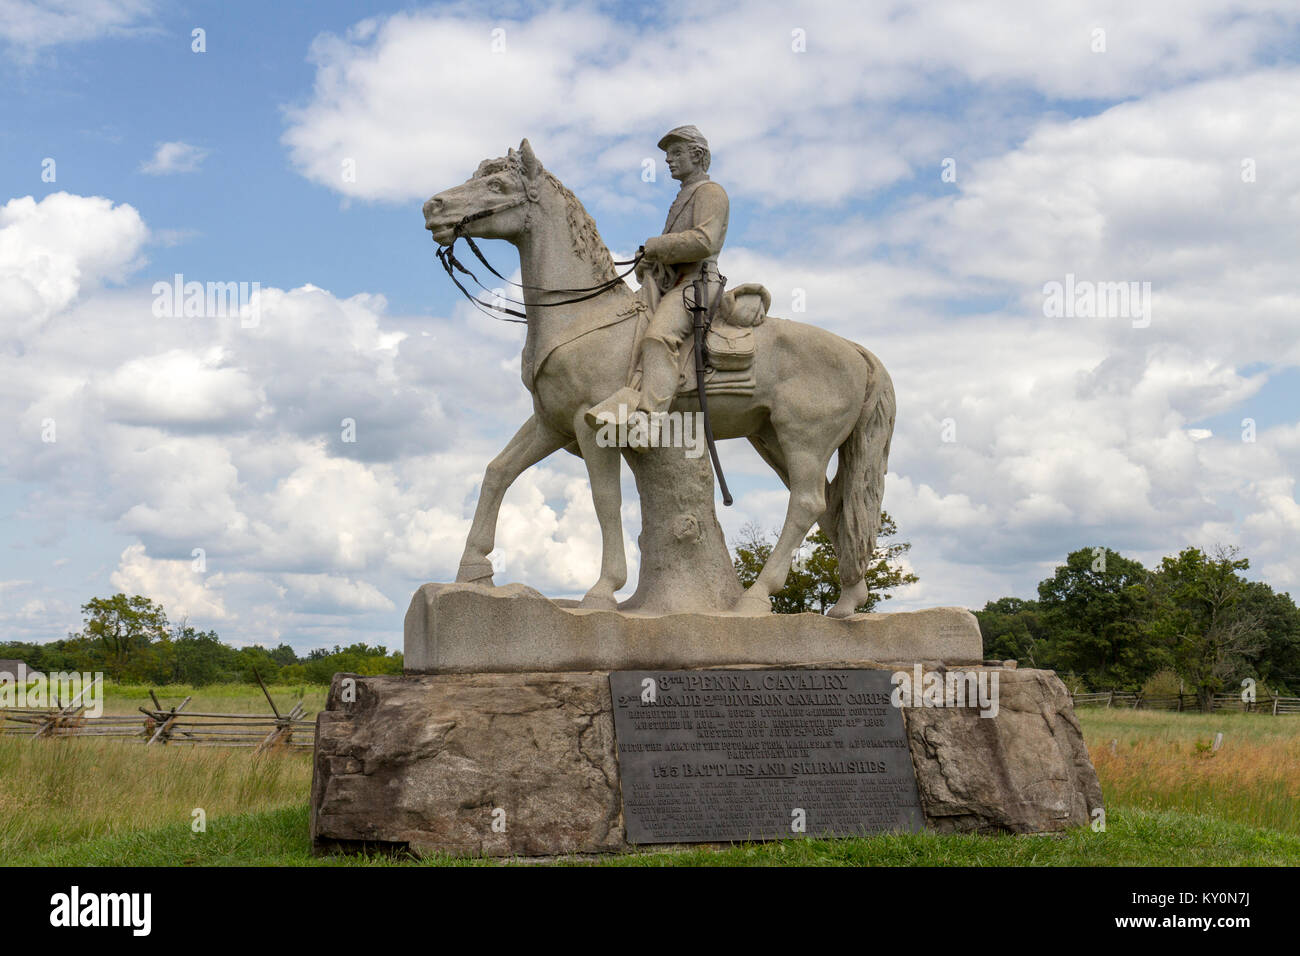 The 8th Pennsylvania Calvary equestrian statue, Gettysburg National Military Park, Pennsylvania, United States. Stock Photo